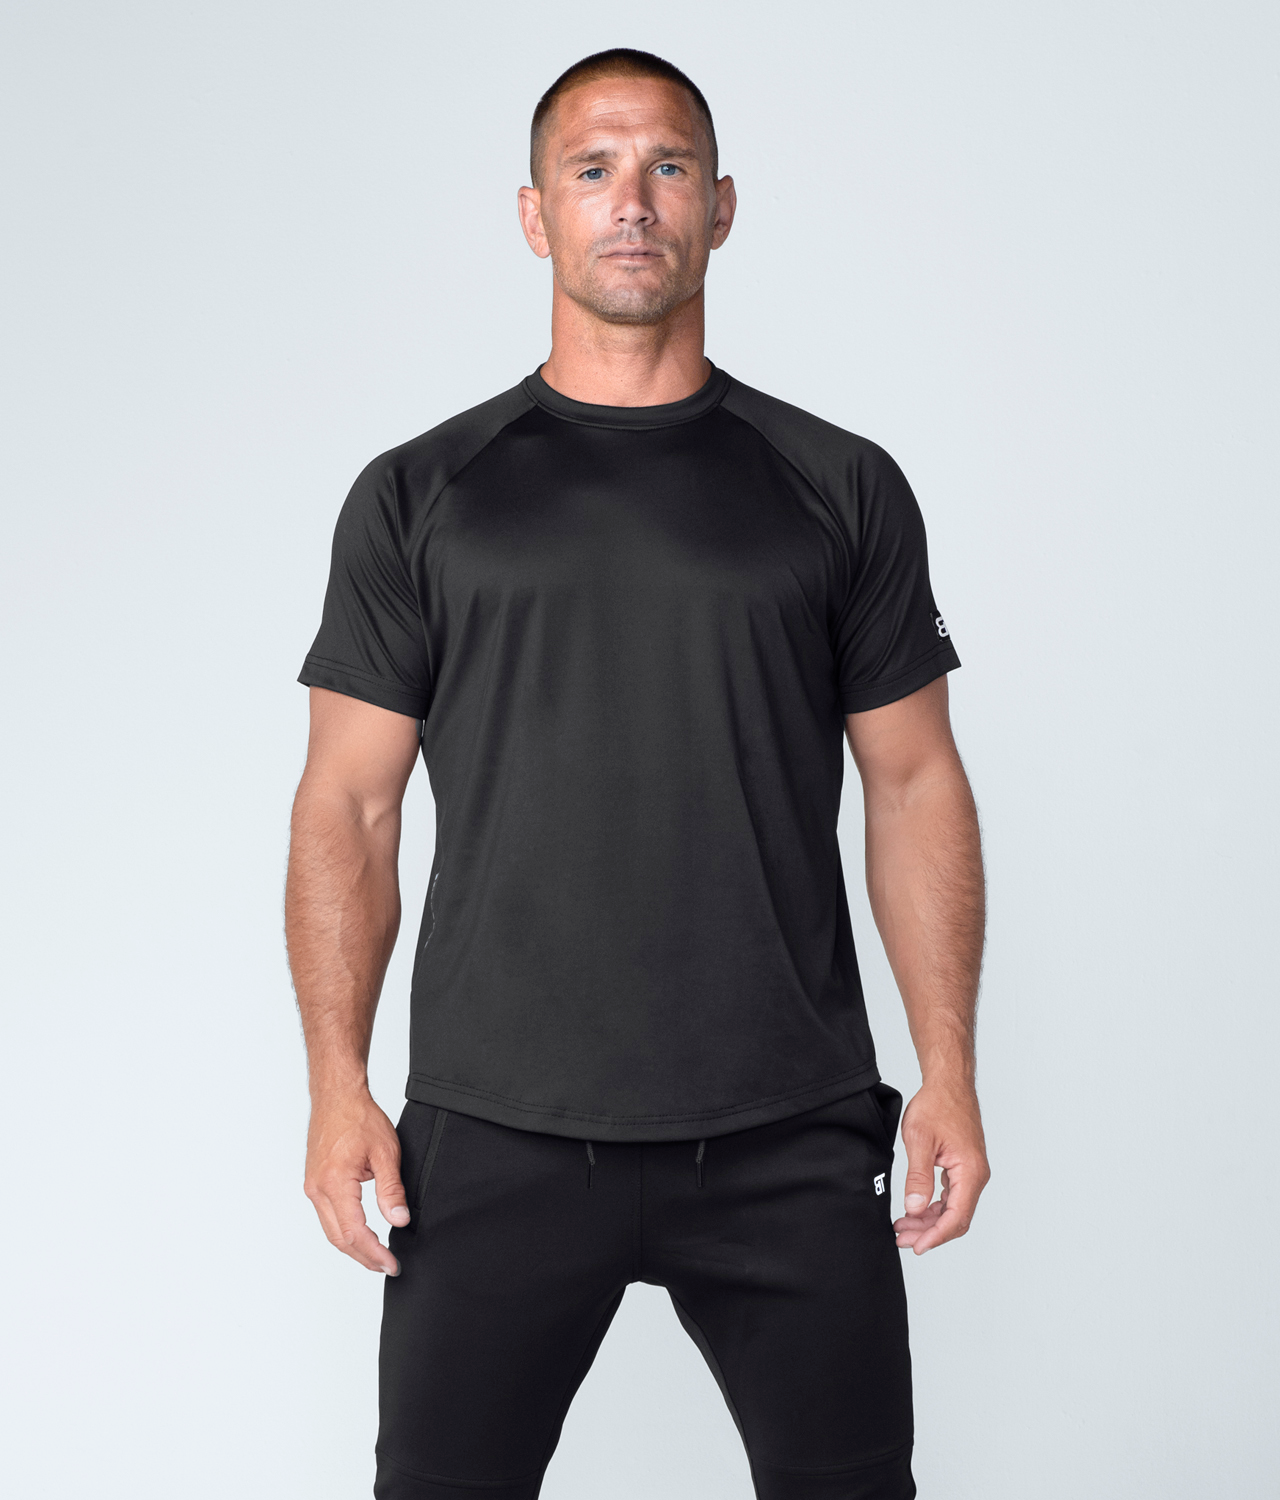 Short Sleeve Workout Shirts for Men